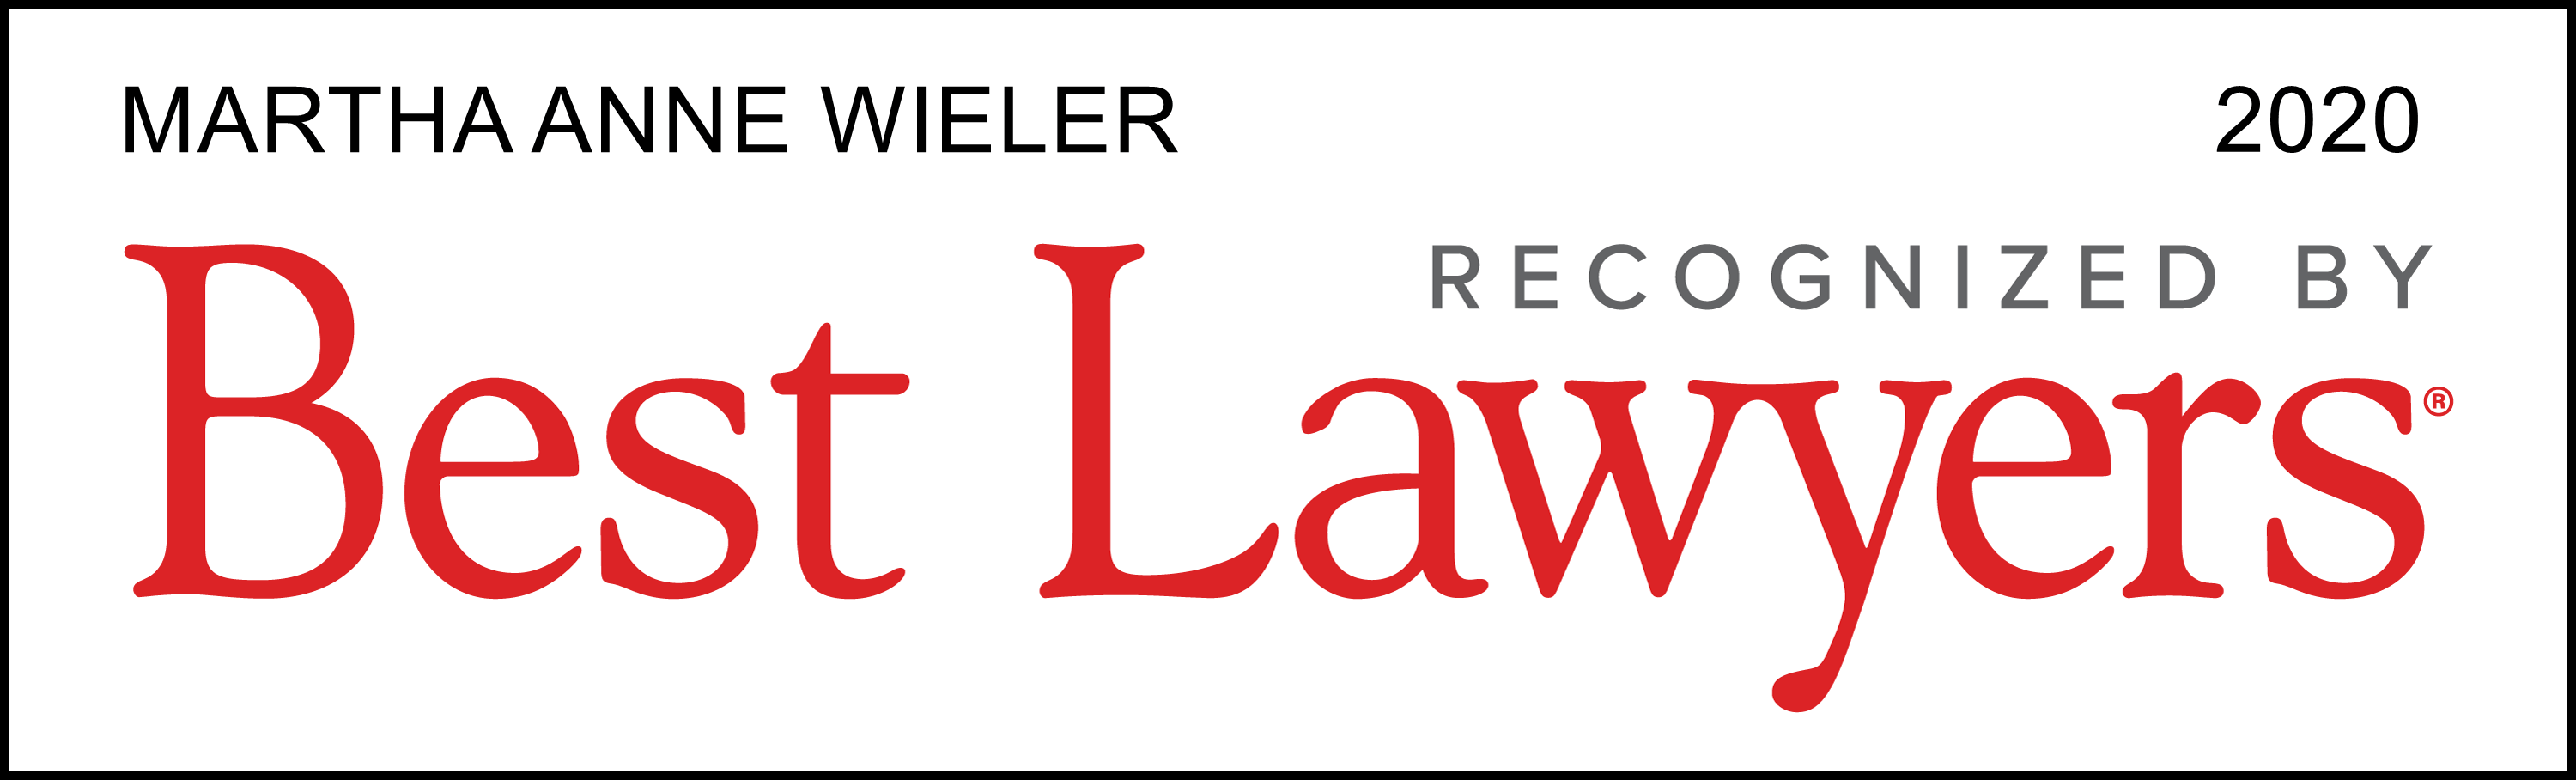 Martha Anne Wieler | Recognized by Best Lawyers | 2020